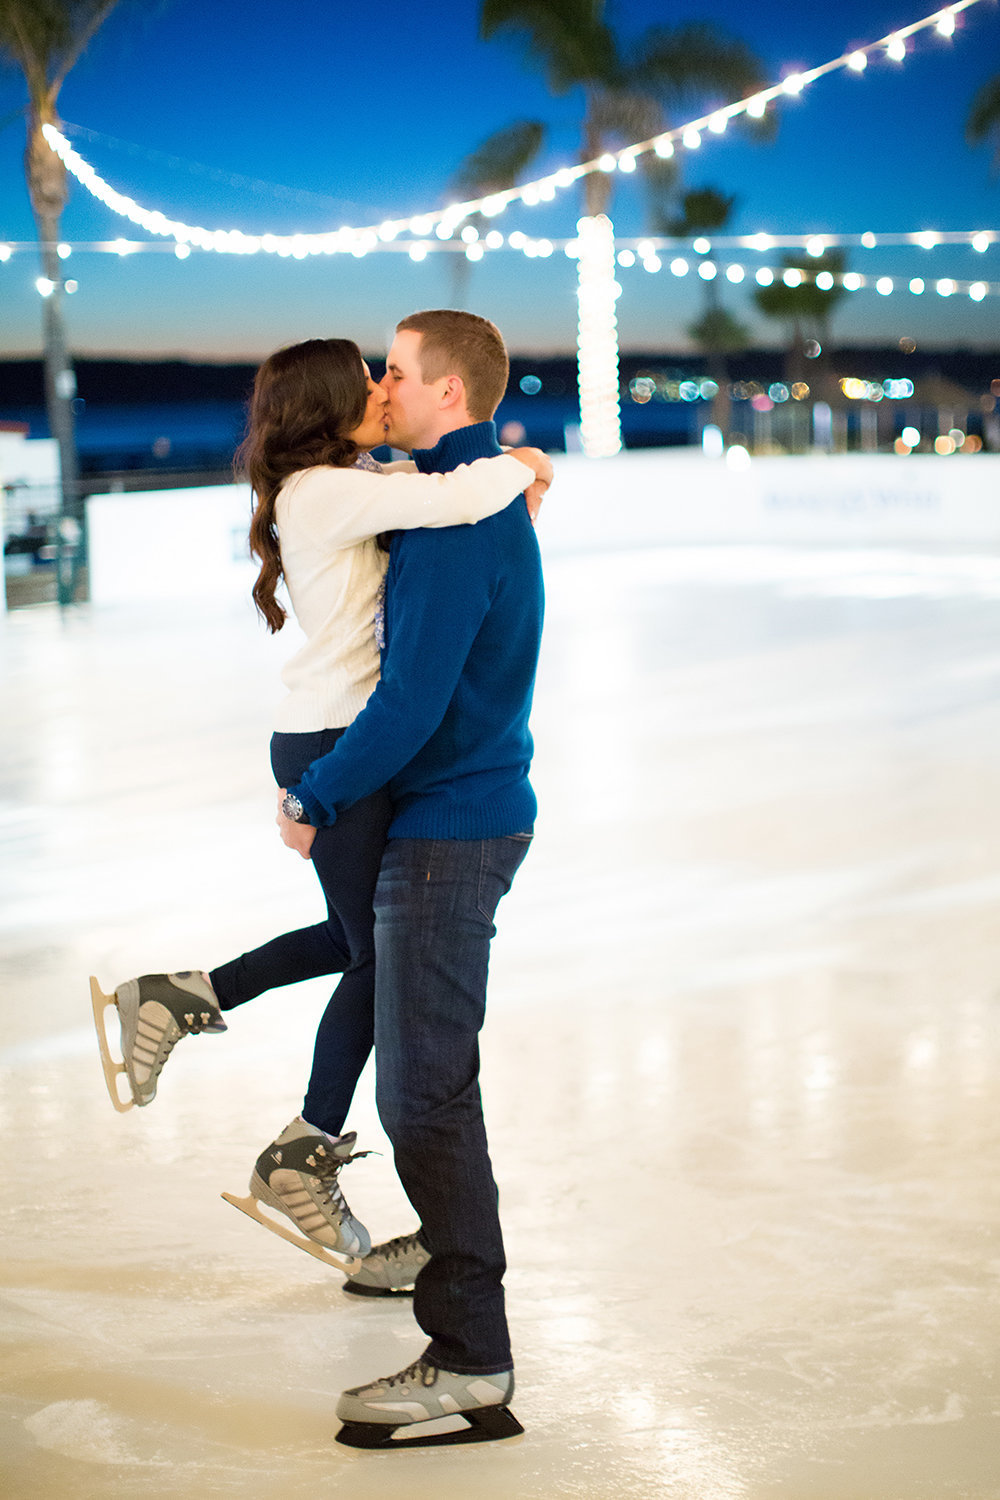 Hotel Del Coronado engagement photos ice skating rink